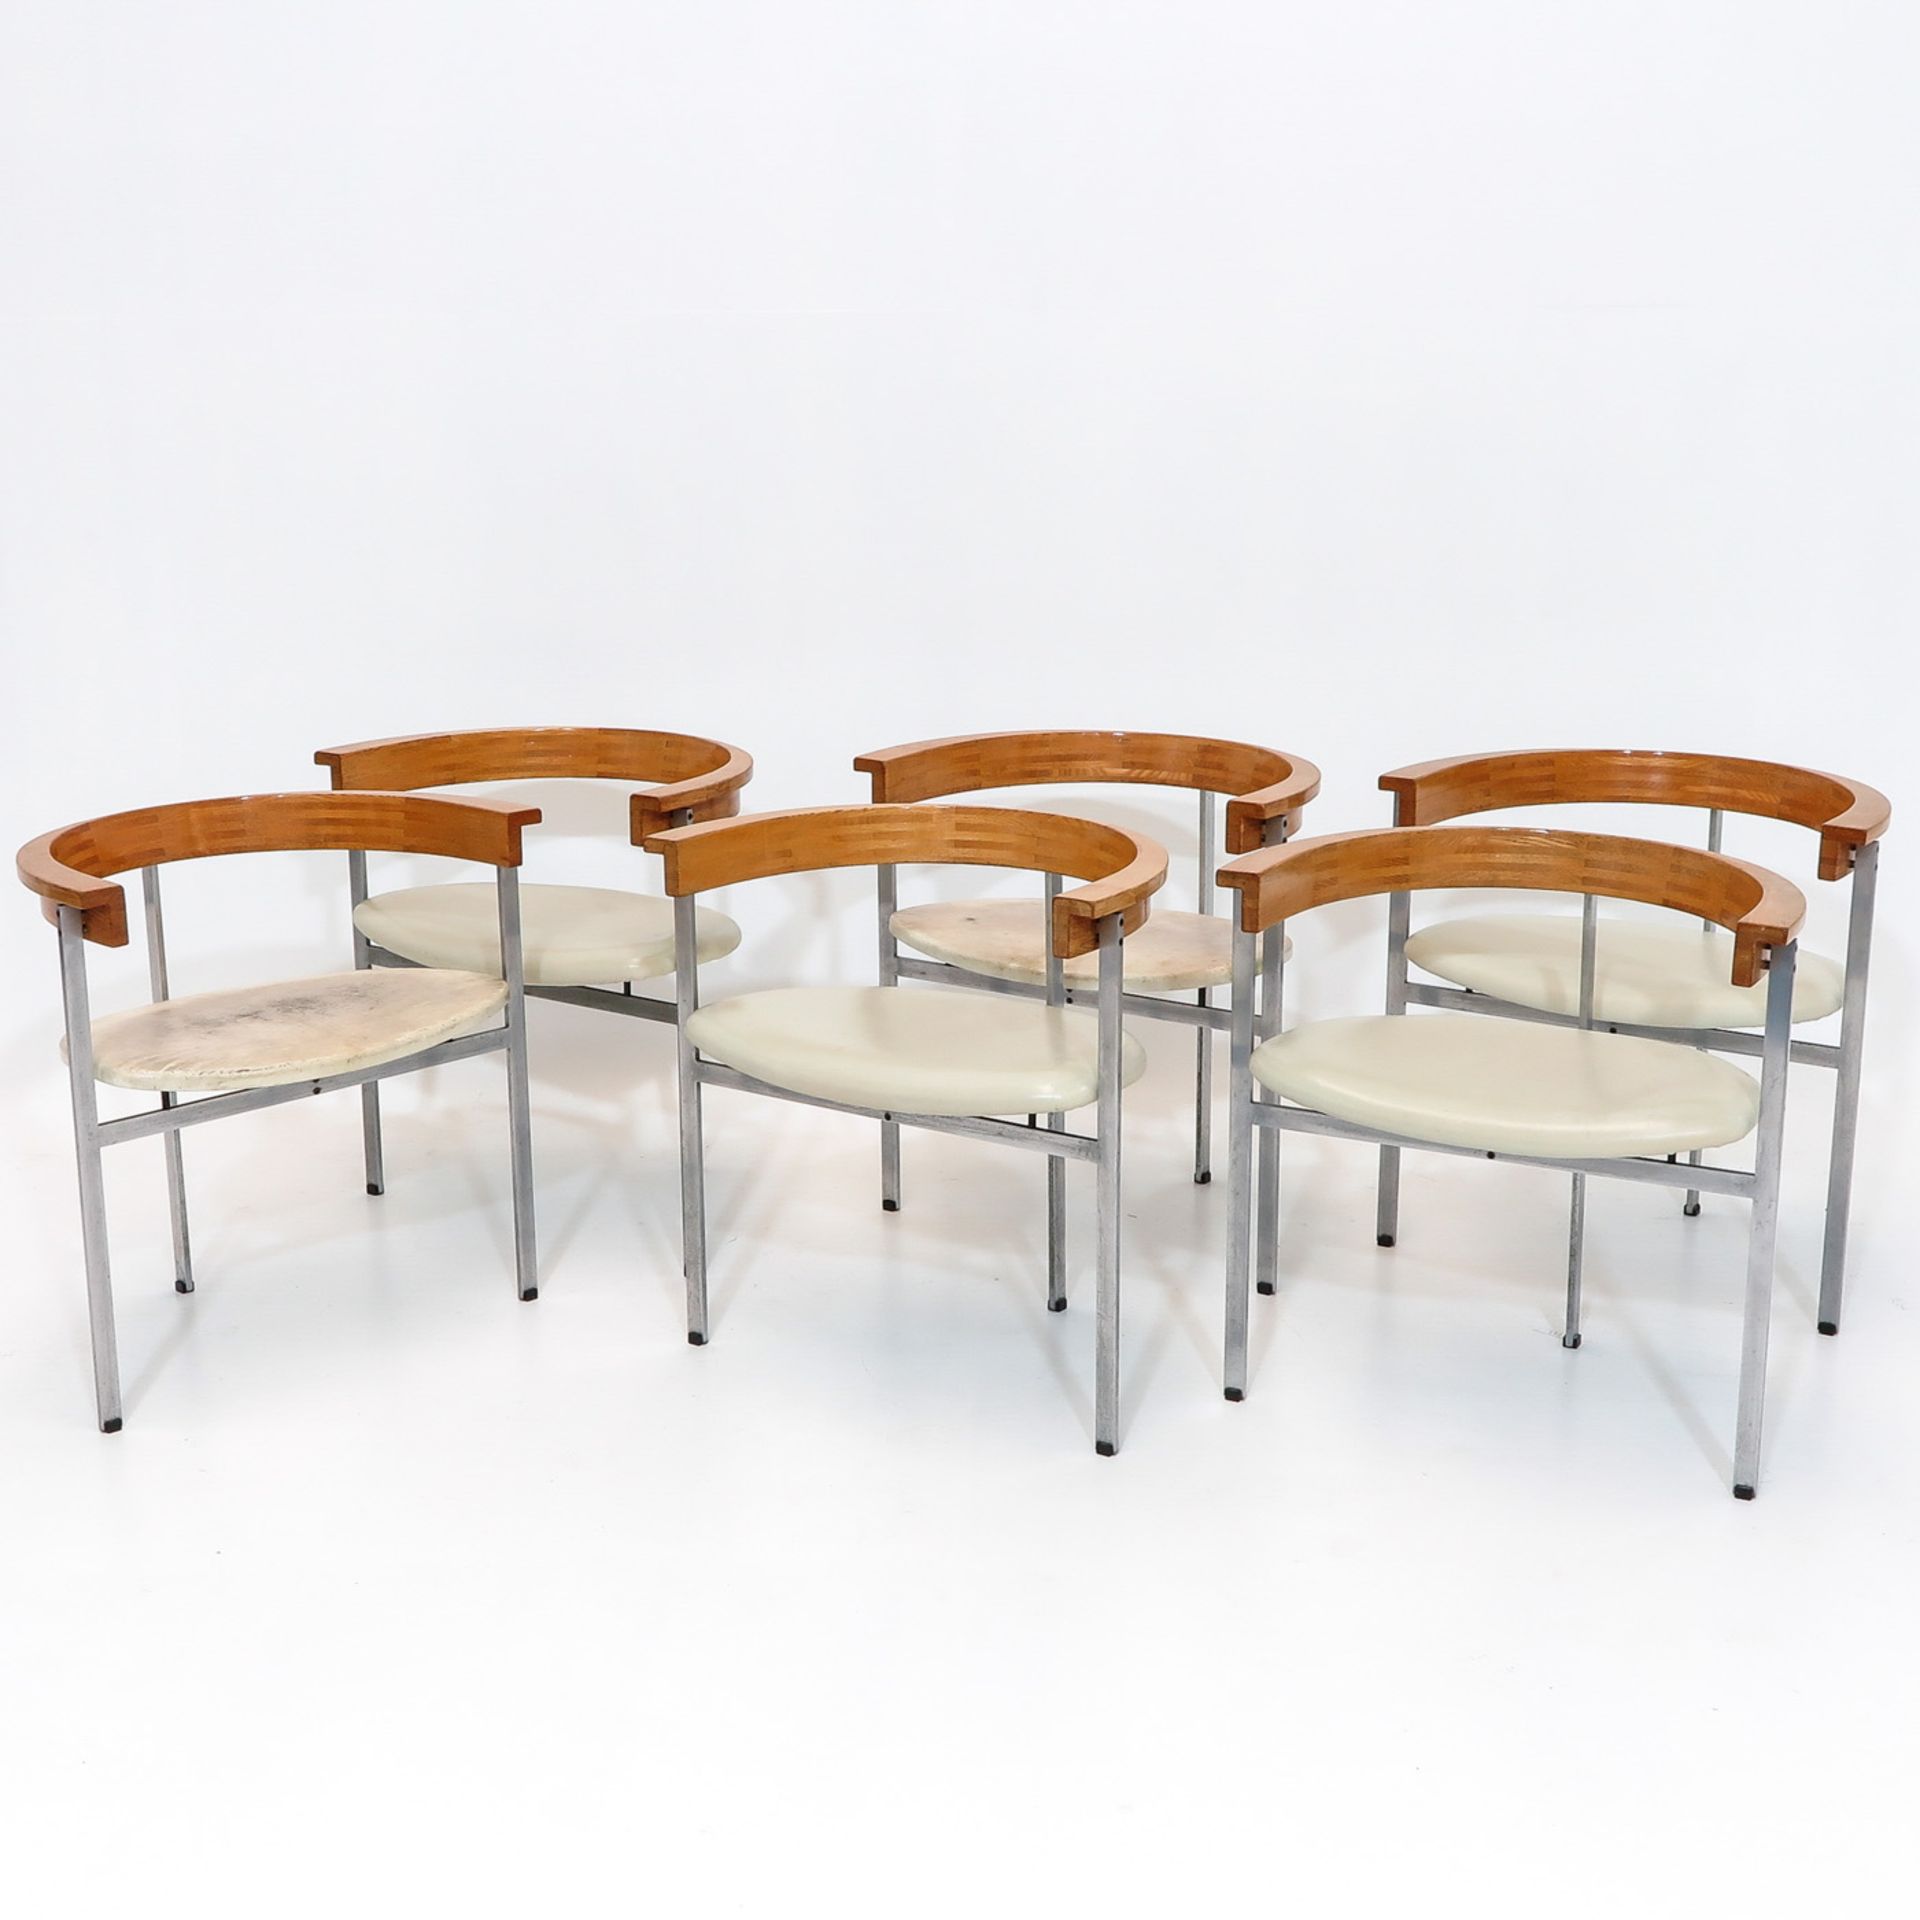 A Set of Six Very Rare Designer Poul Kjaerholm Chairs